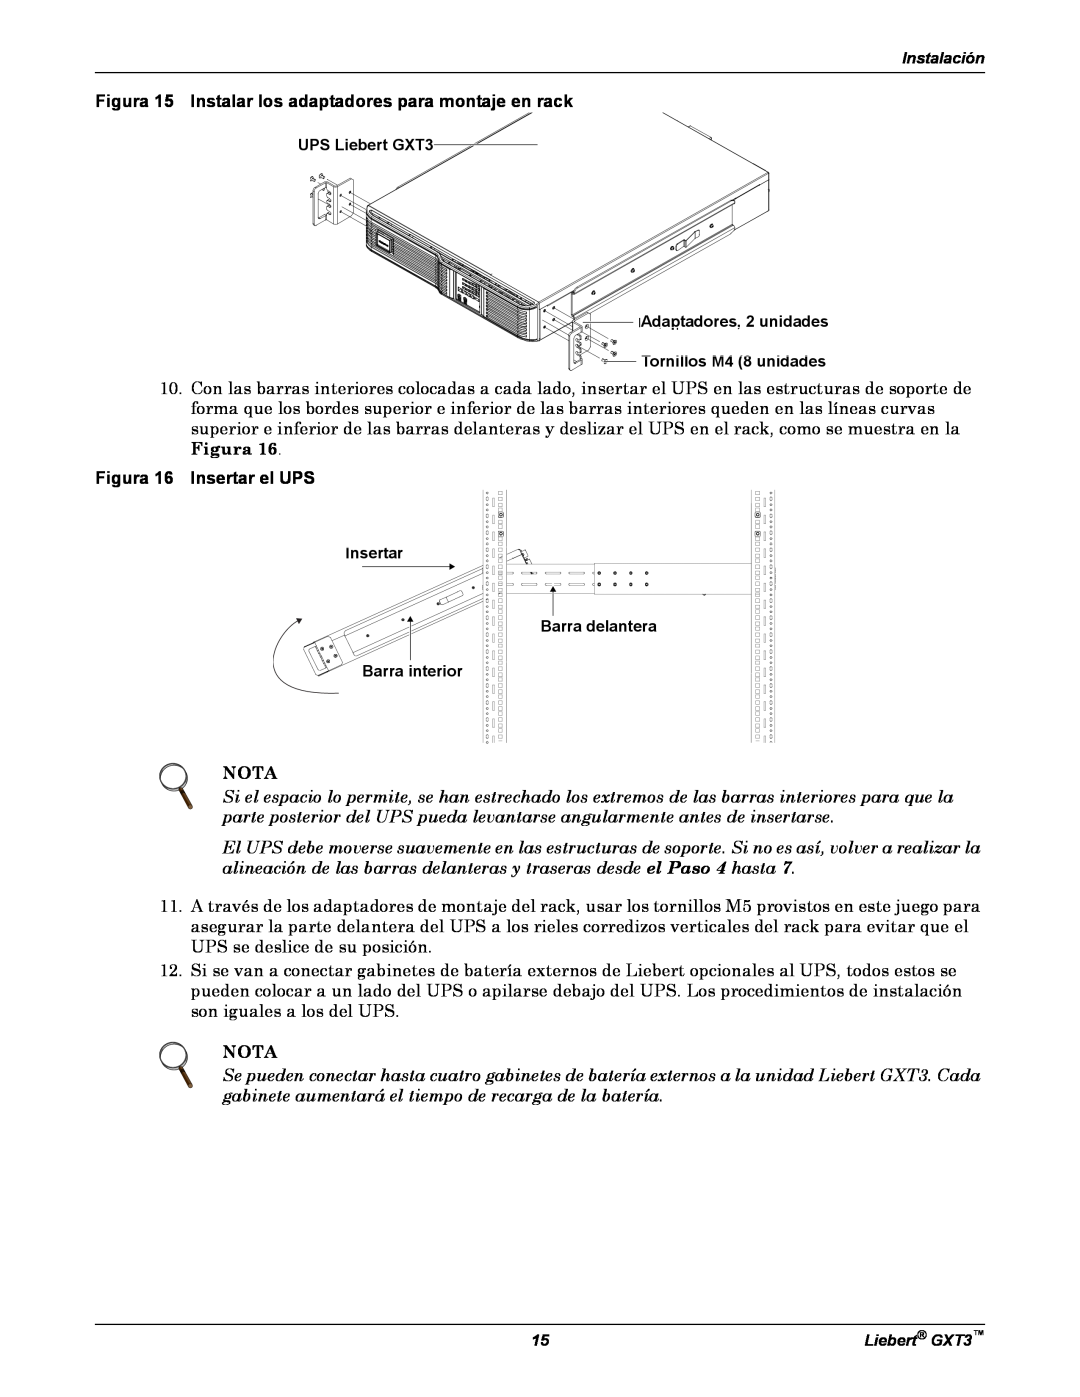 Emerson GXT3 manual Figura 15 Instalar los adaptadores para montaje en rack, Figura 16 Insertar el UPS, Nota 